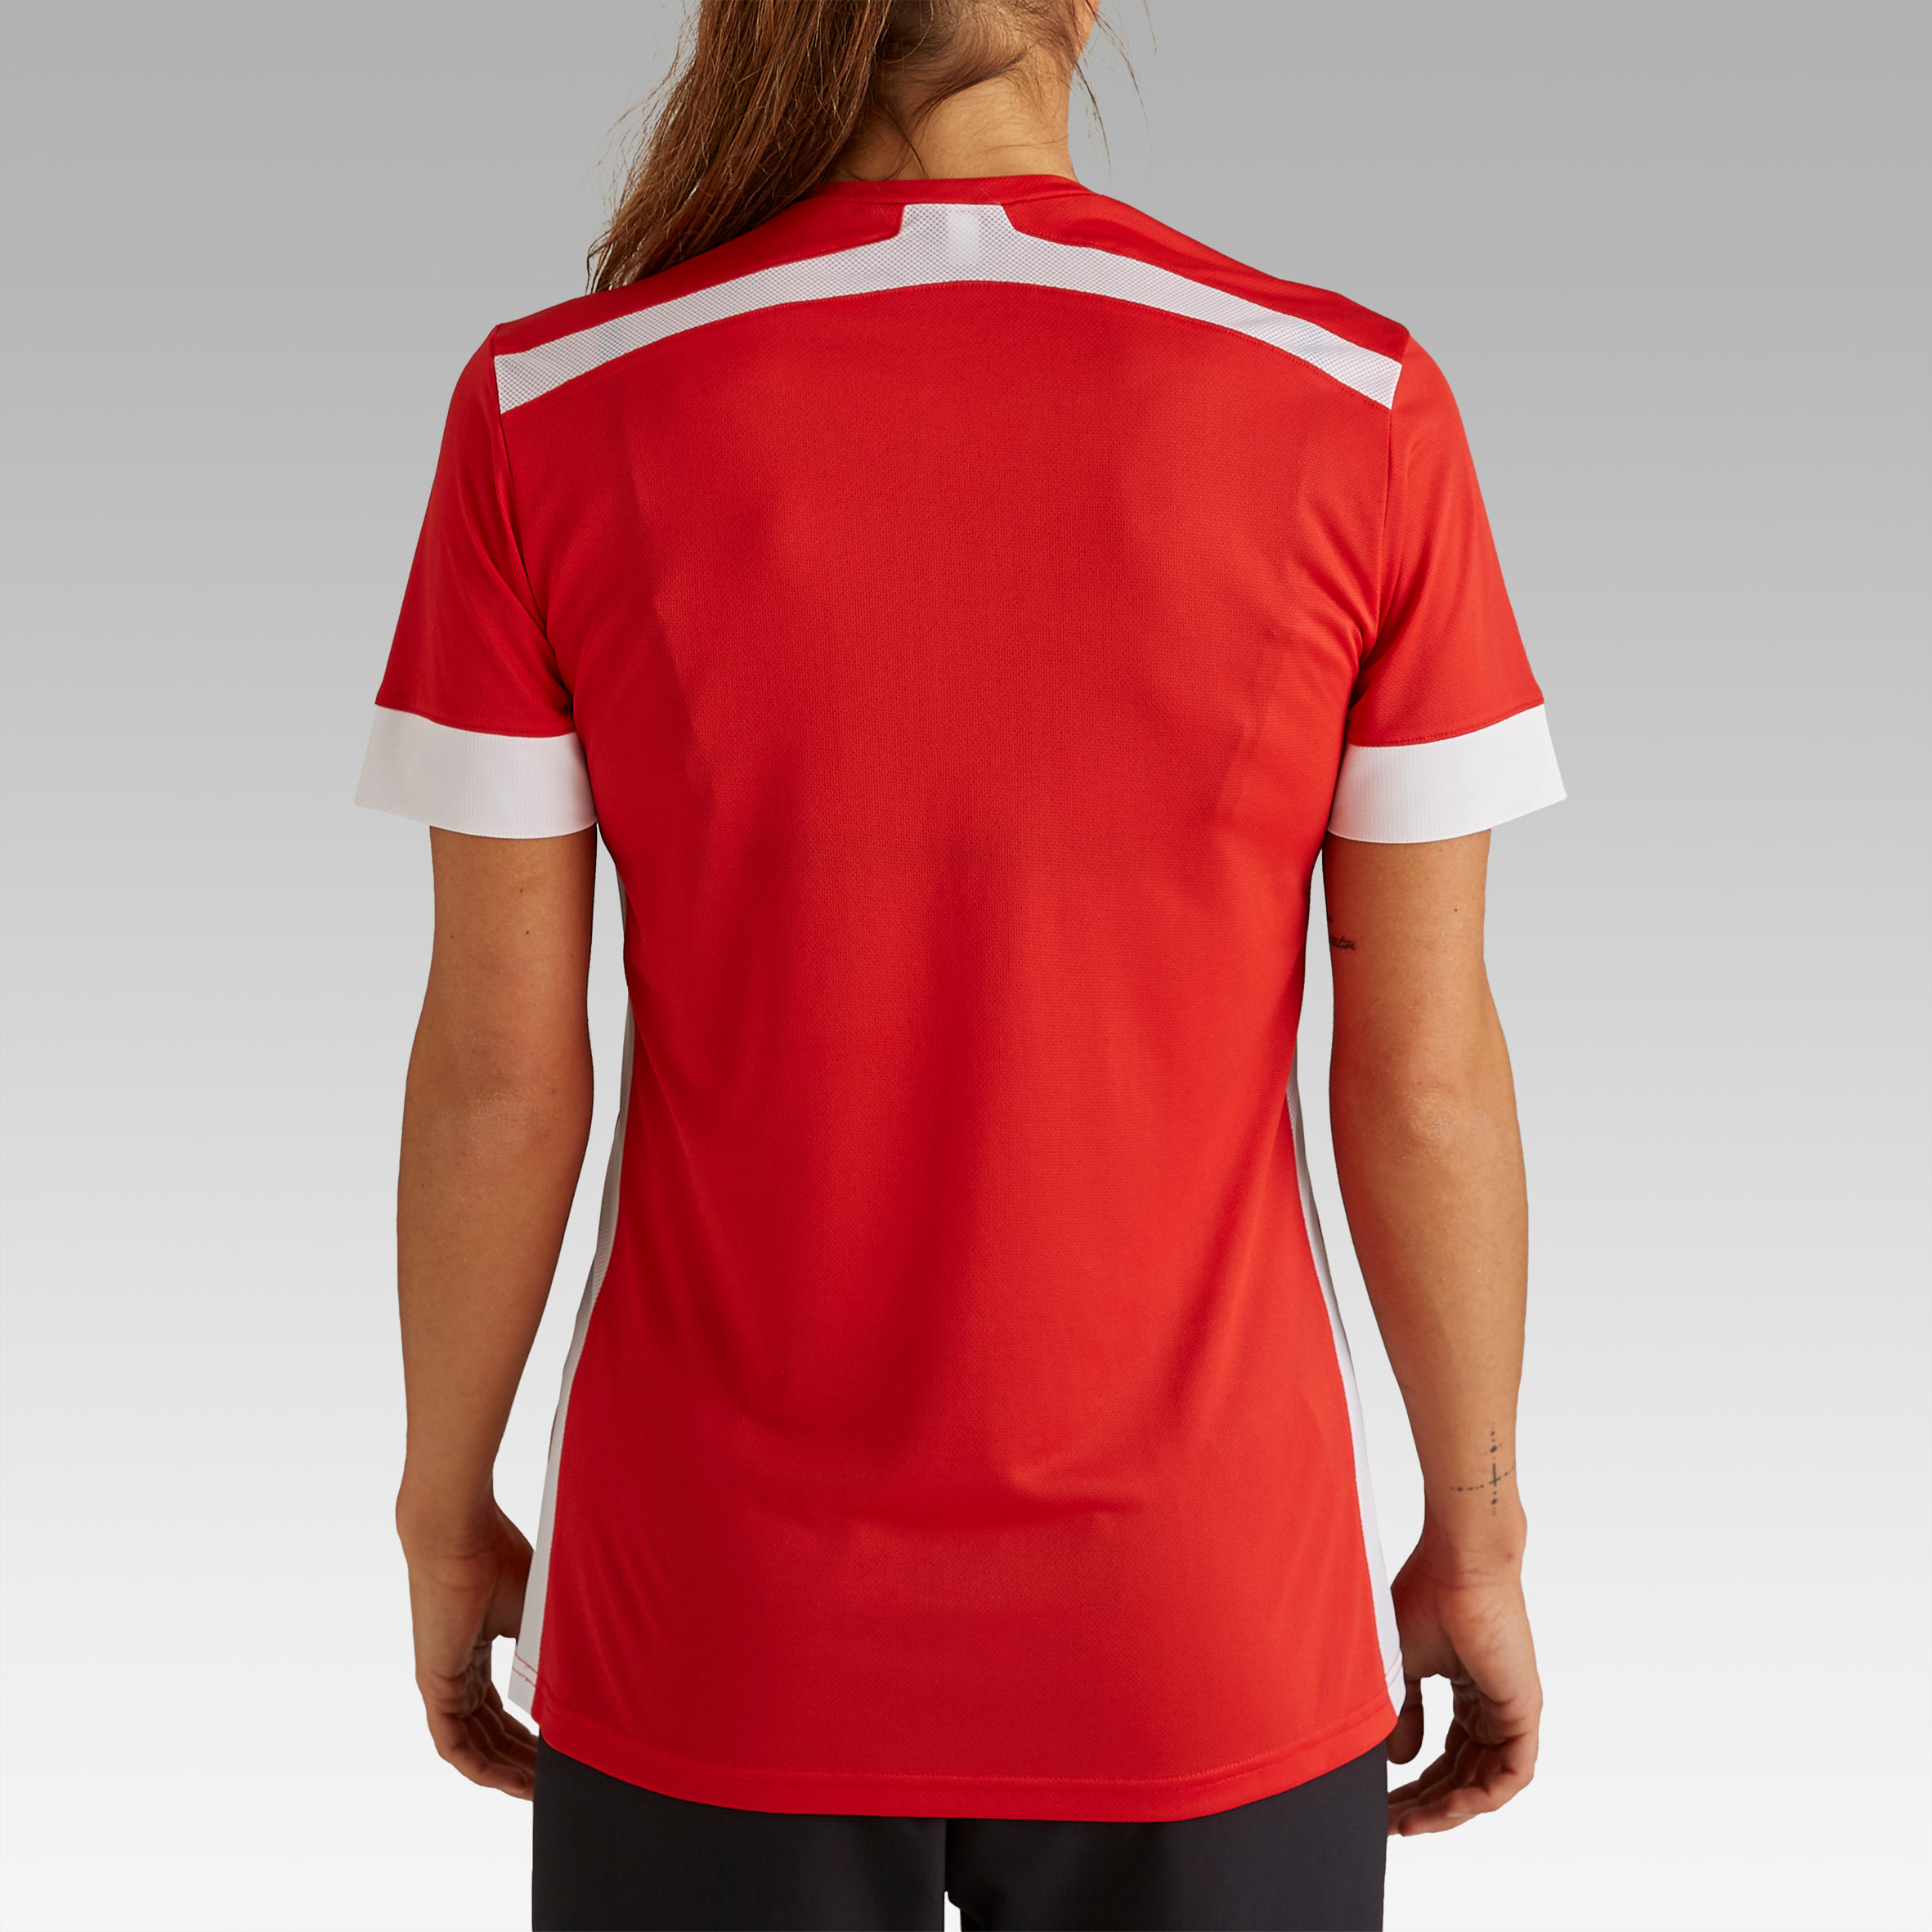 F500 Women's Football Jersey - Red/White 4/10